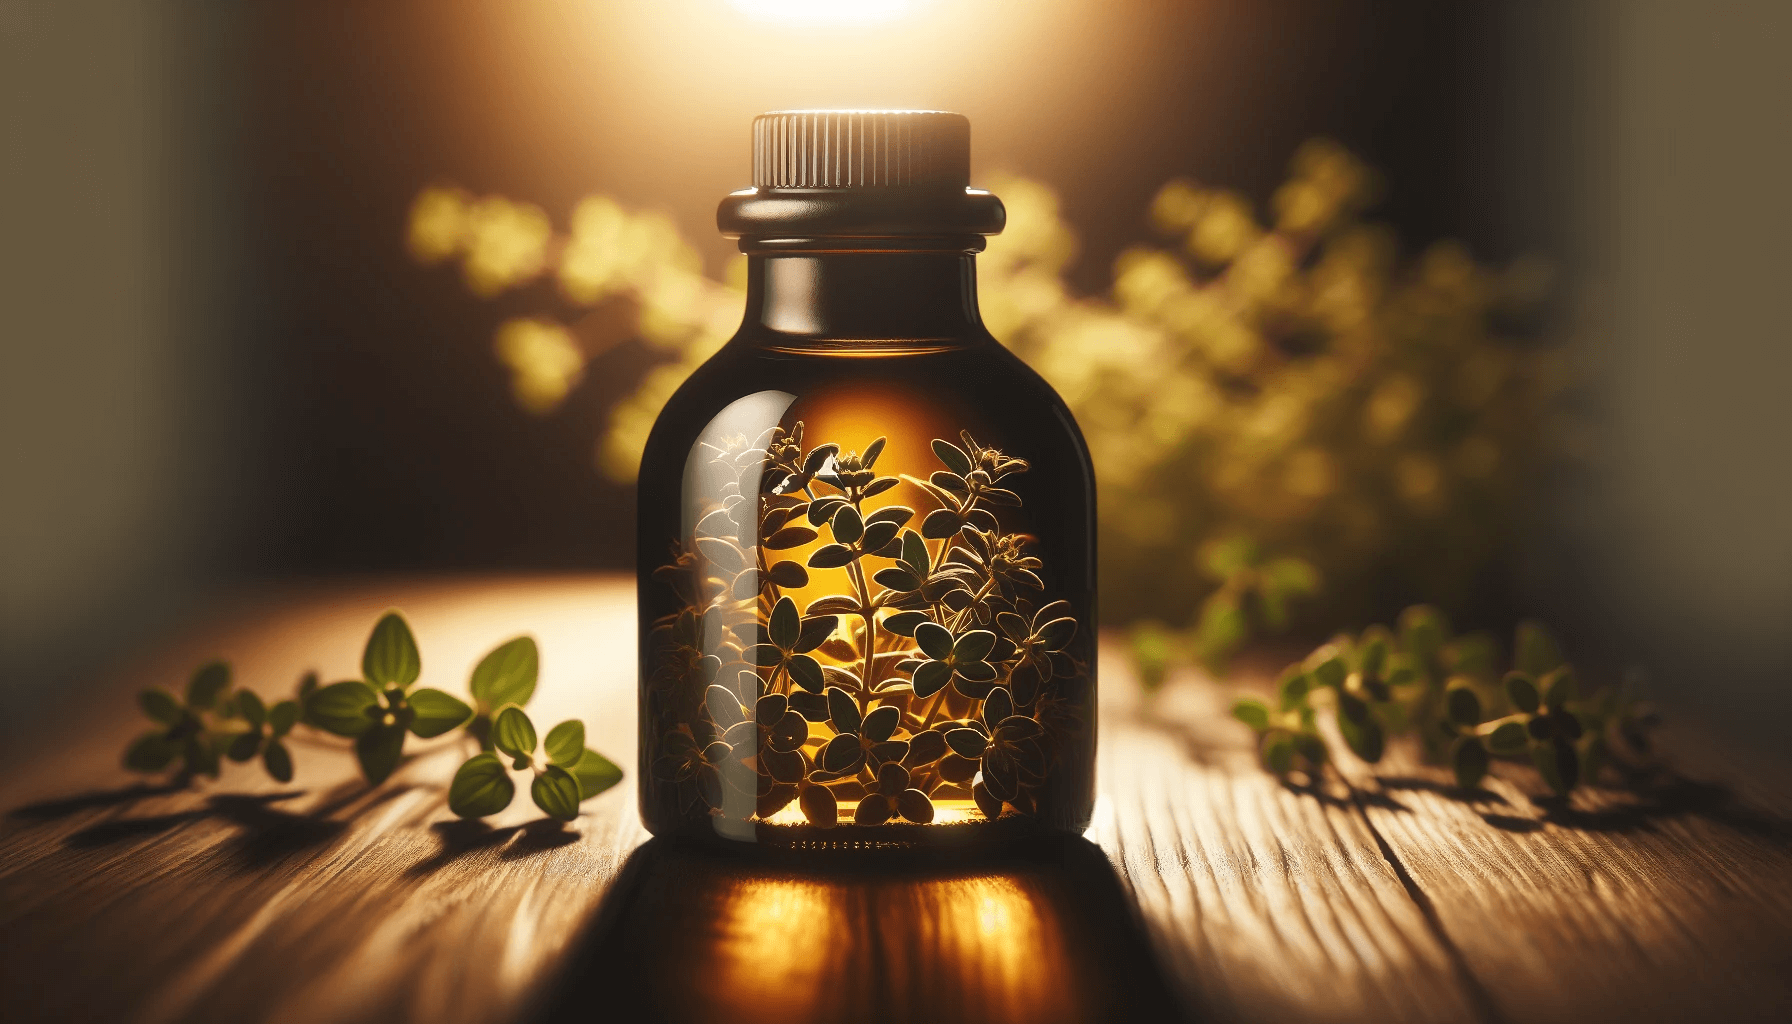 Premium oregano oil glistening in the soft golden light.